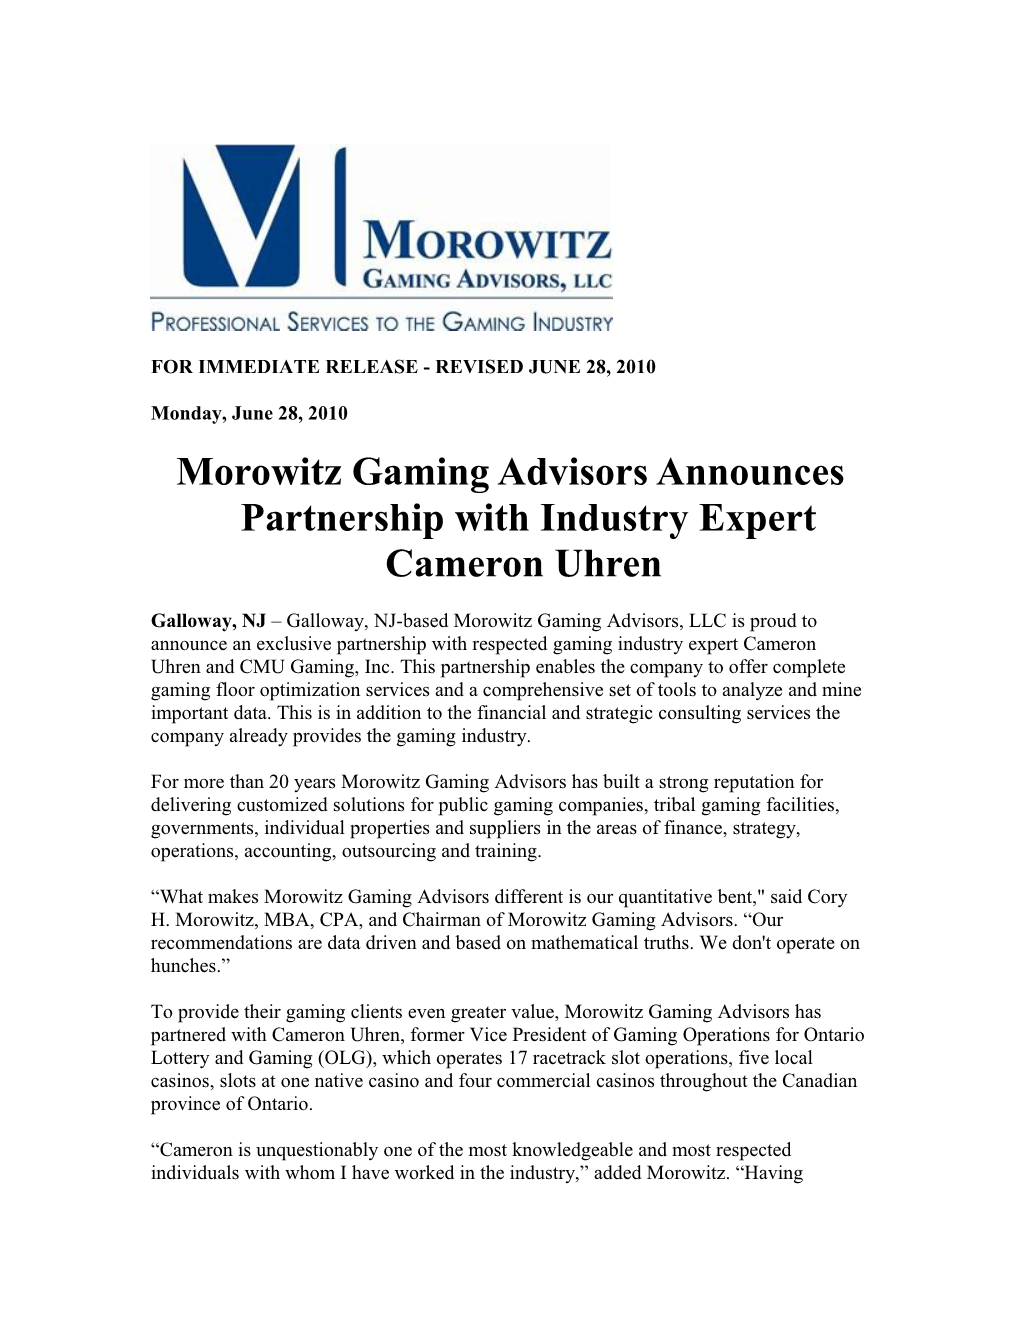 Morowitz Gaming Advisors Announces Partnership with Industry Expert Cameron Uhren